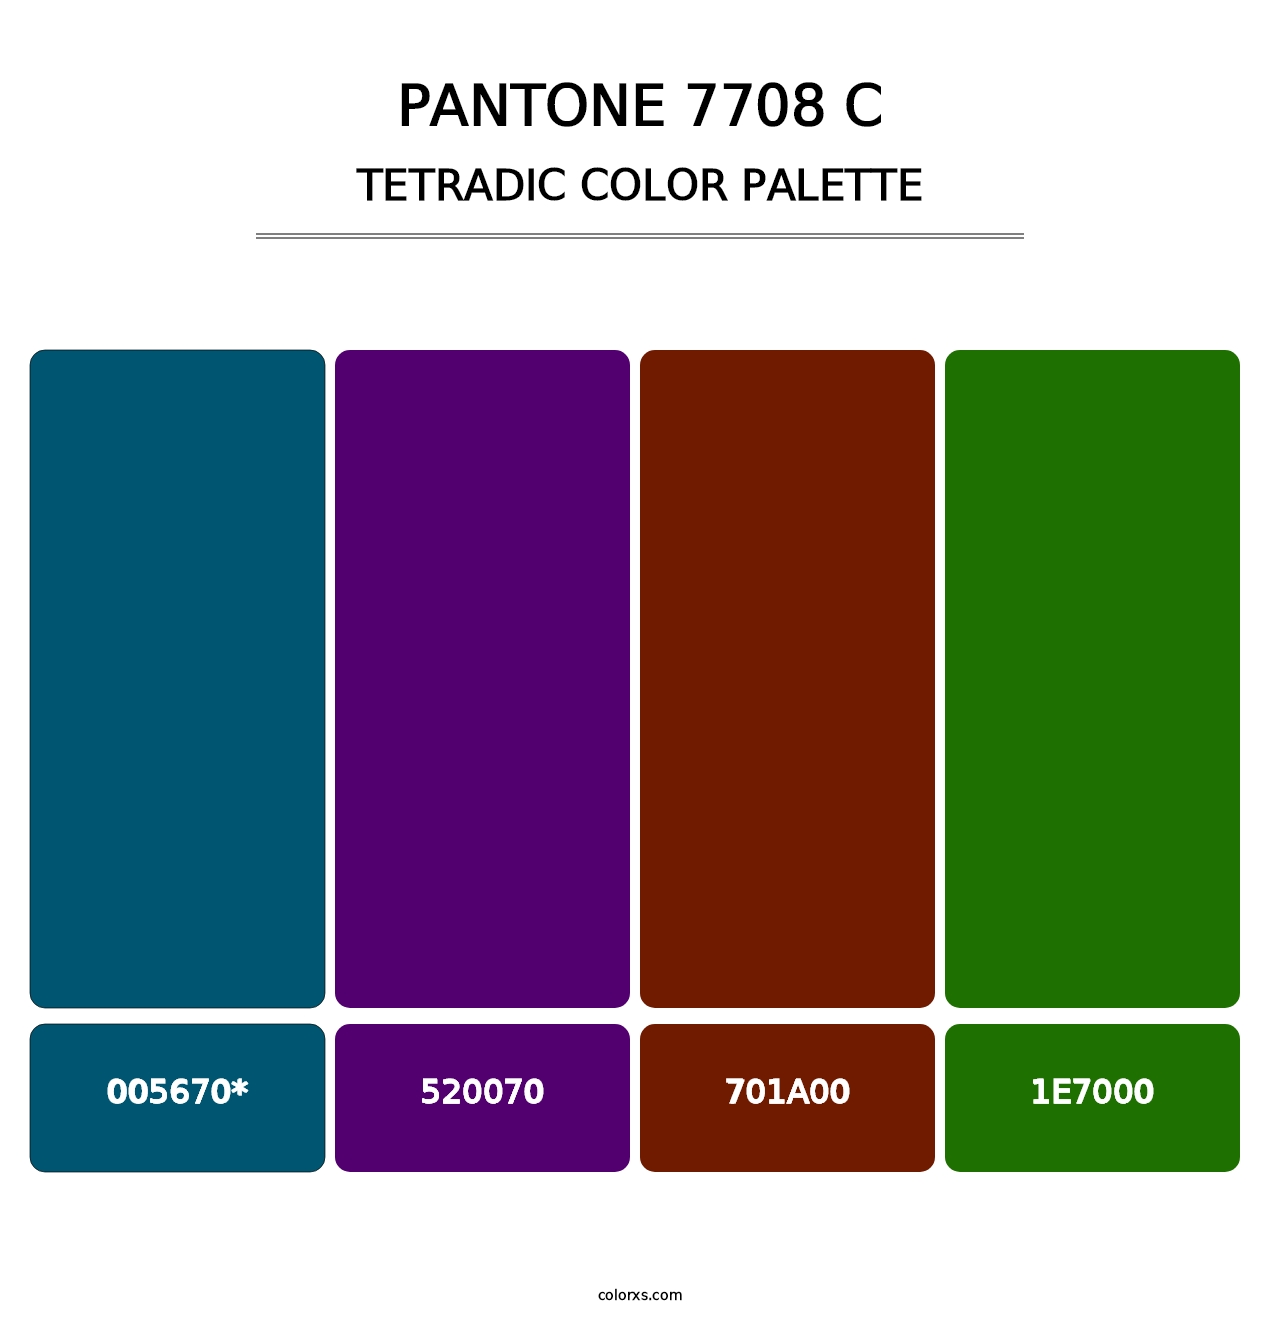 PANTONE 7708 C - Tetradic Color Palette